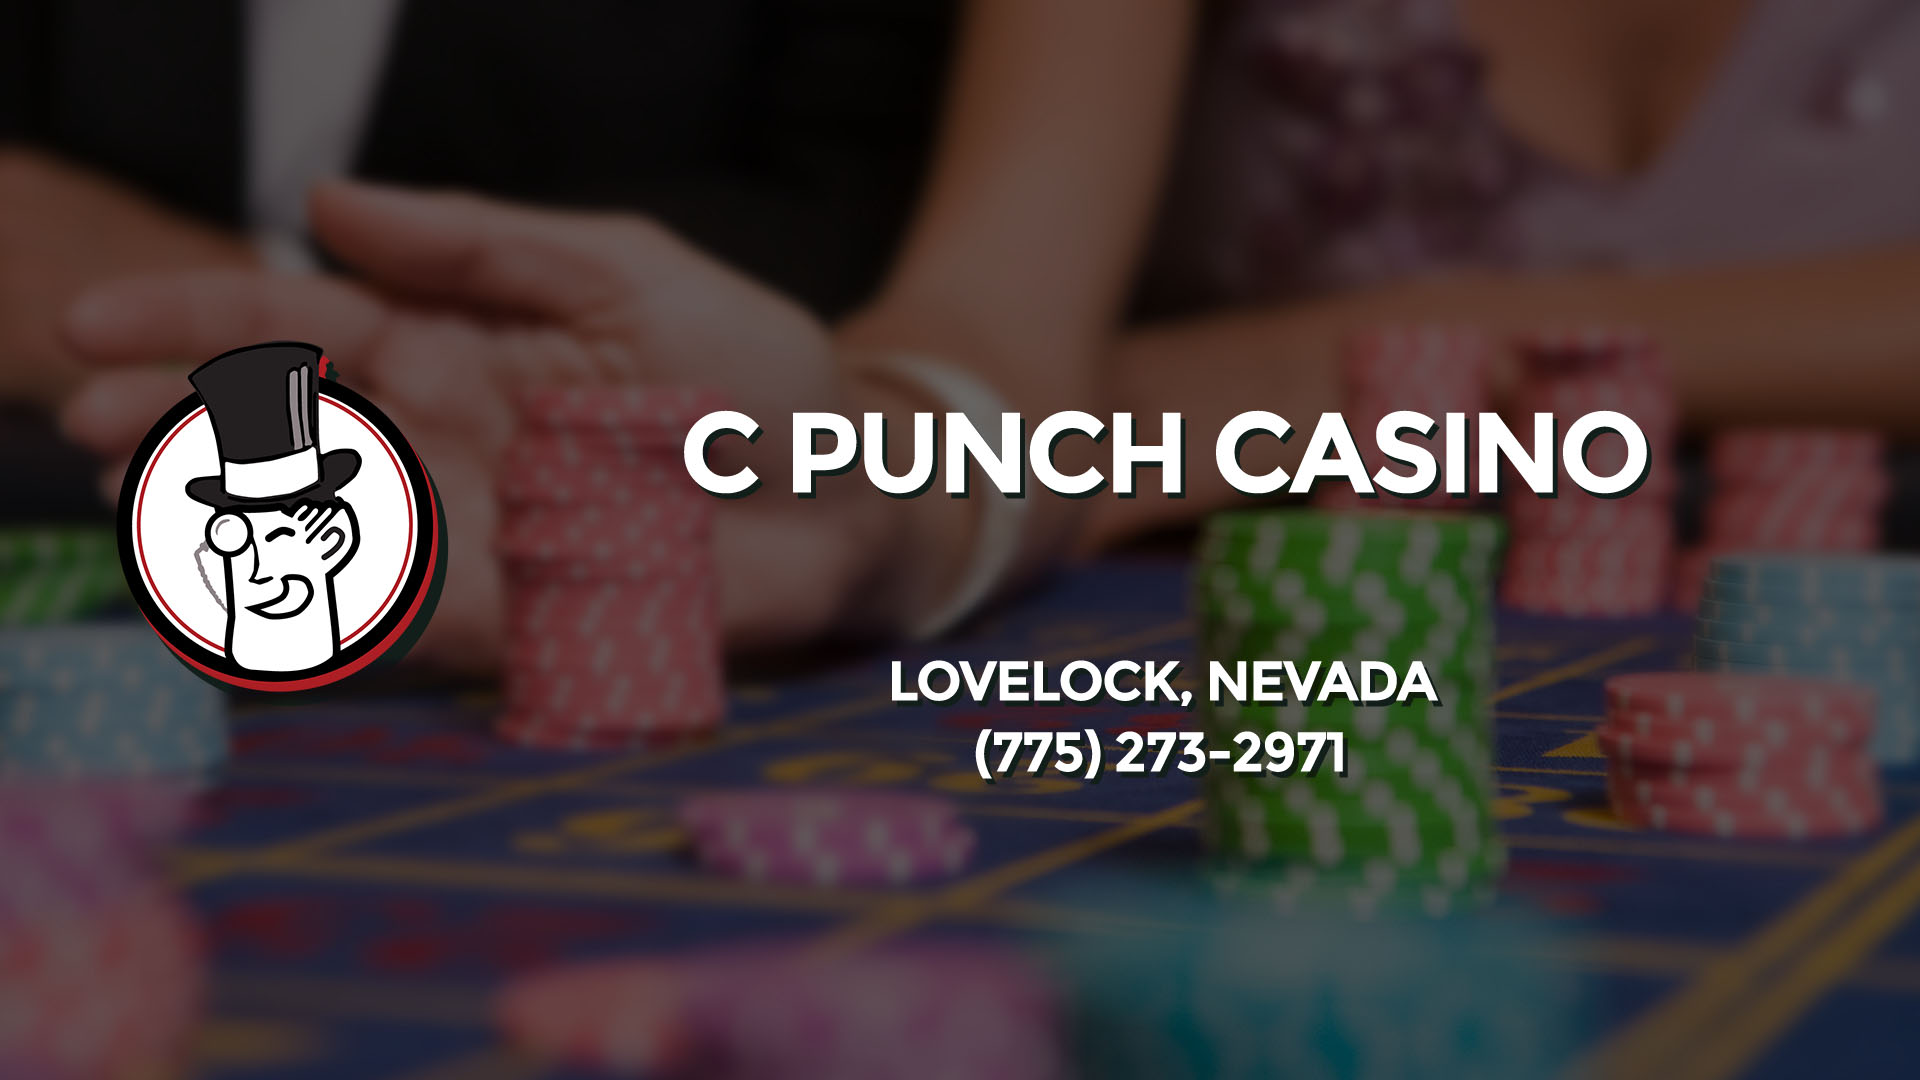 c punch casino lovelock nv